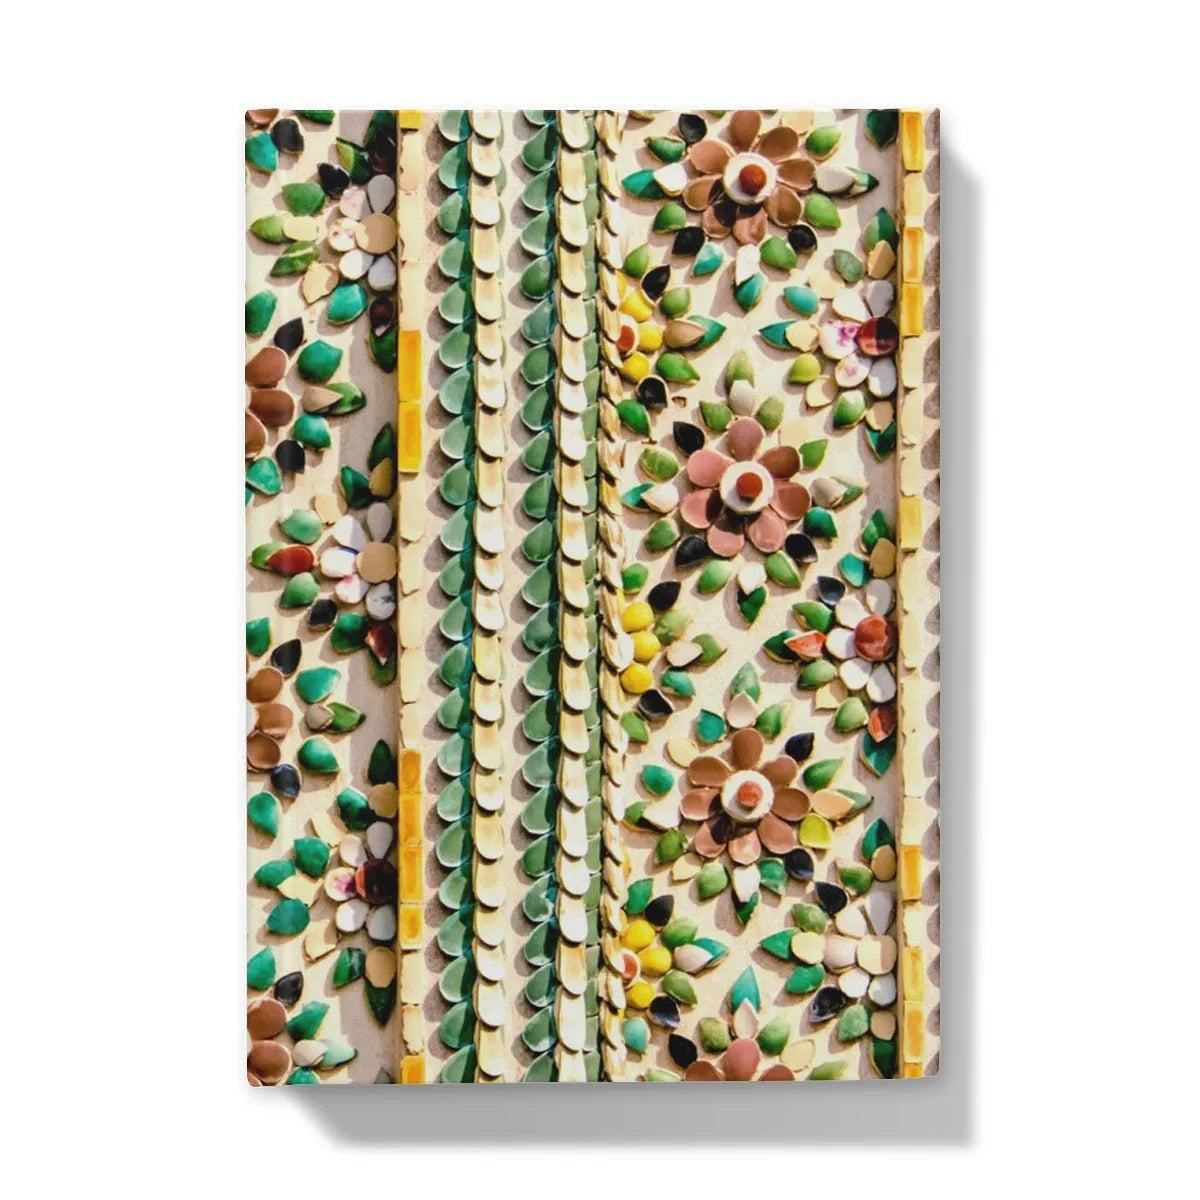 Flower Beds Hardback Journal - 5’x7’ / Lined - Notebooks & Notepads - Aesthetic Art